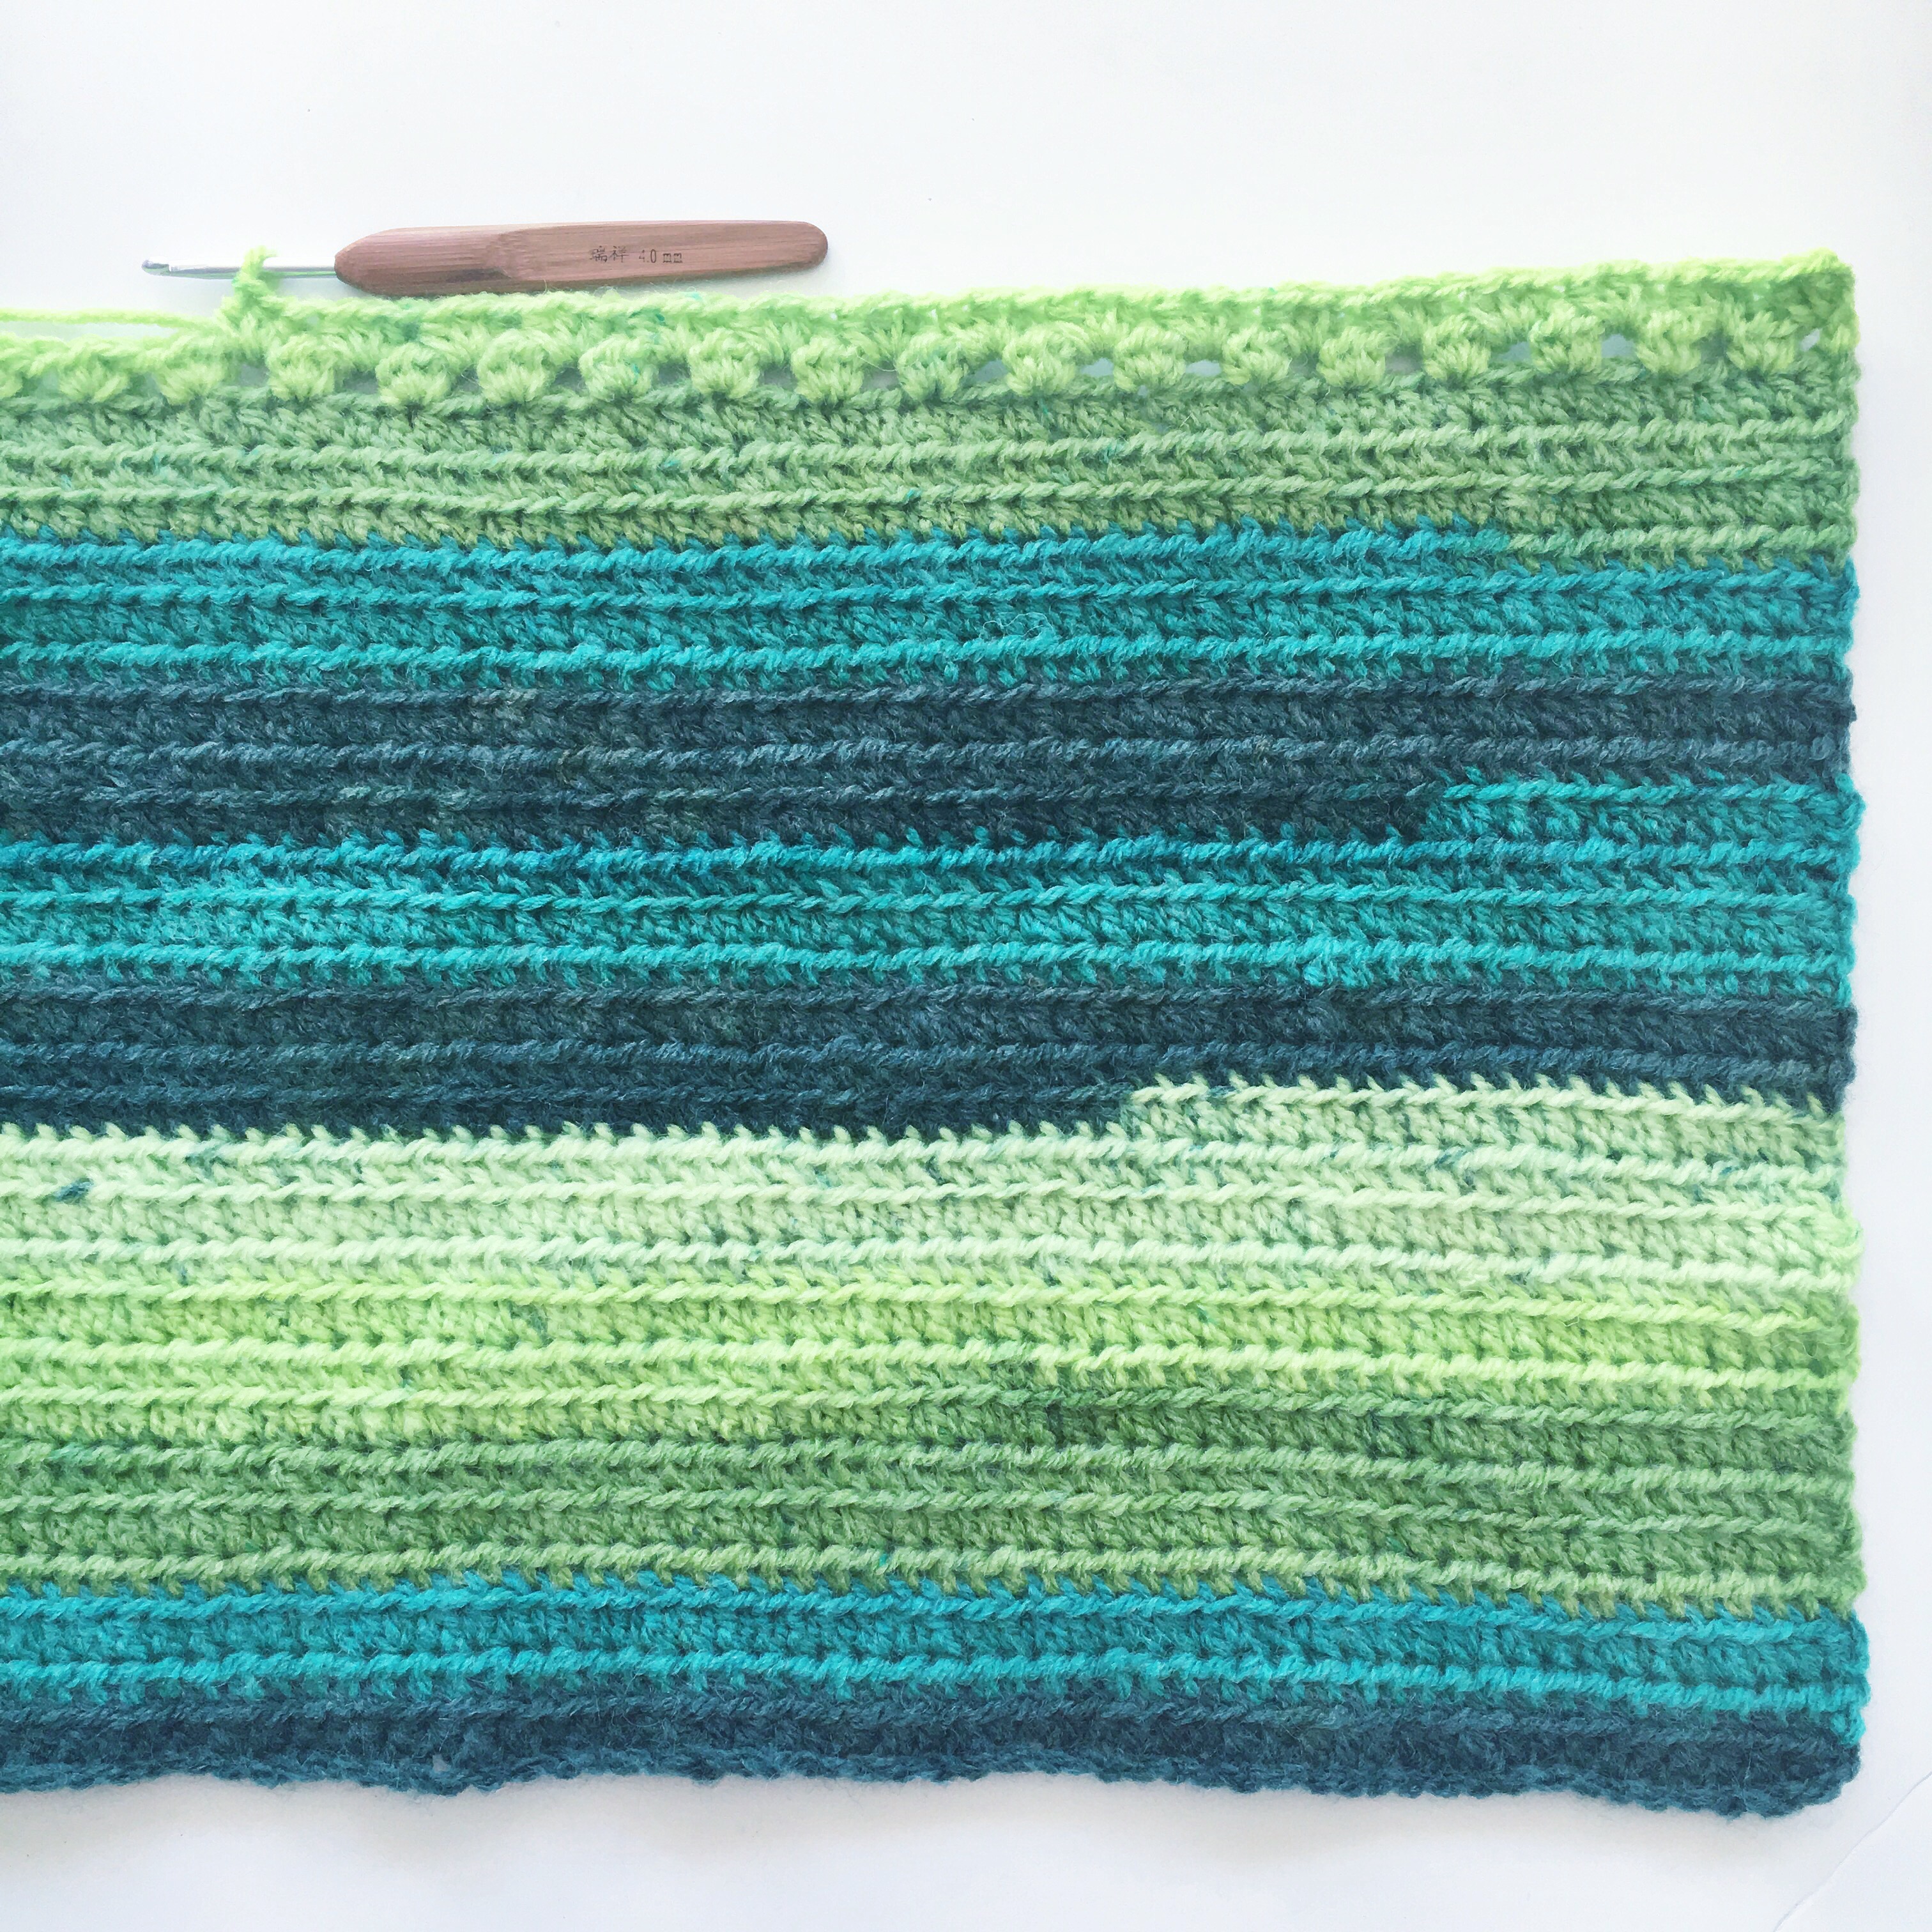 Shades of Green Crochet Blanket